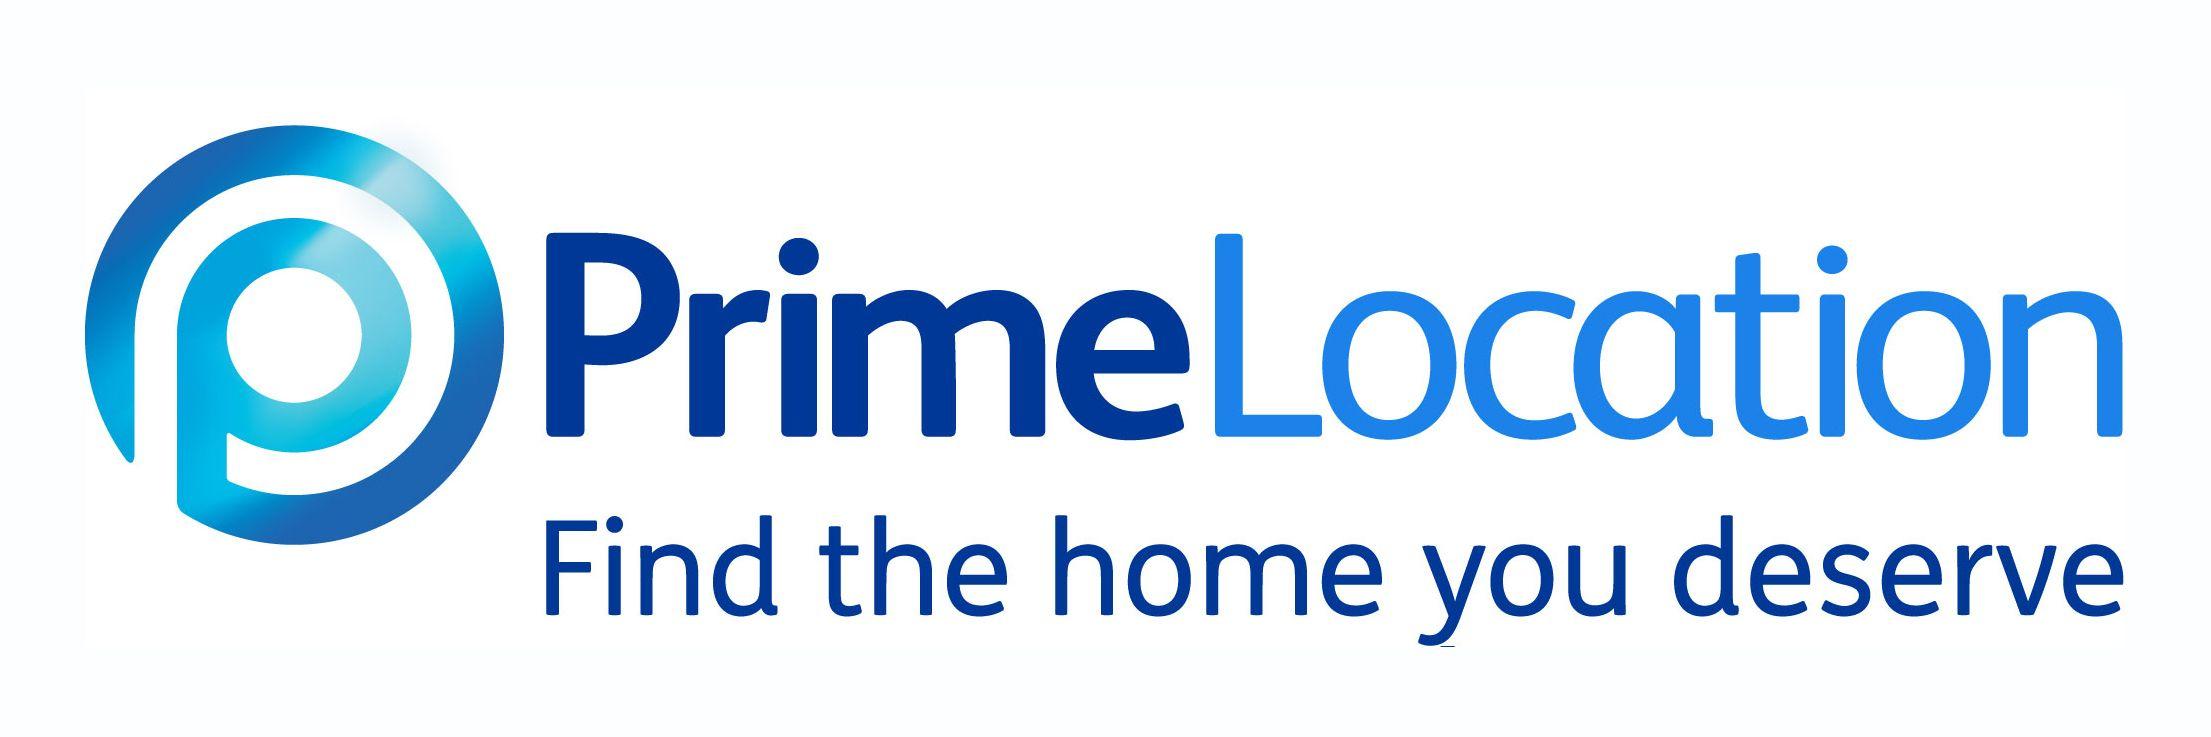 Google Location Logo - Prime Location Logo